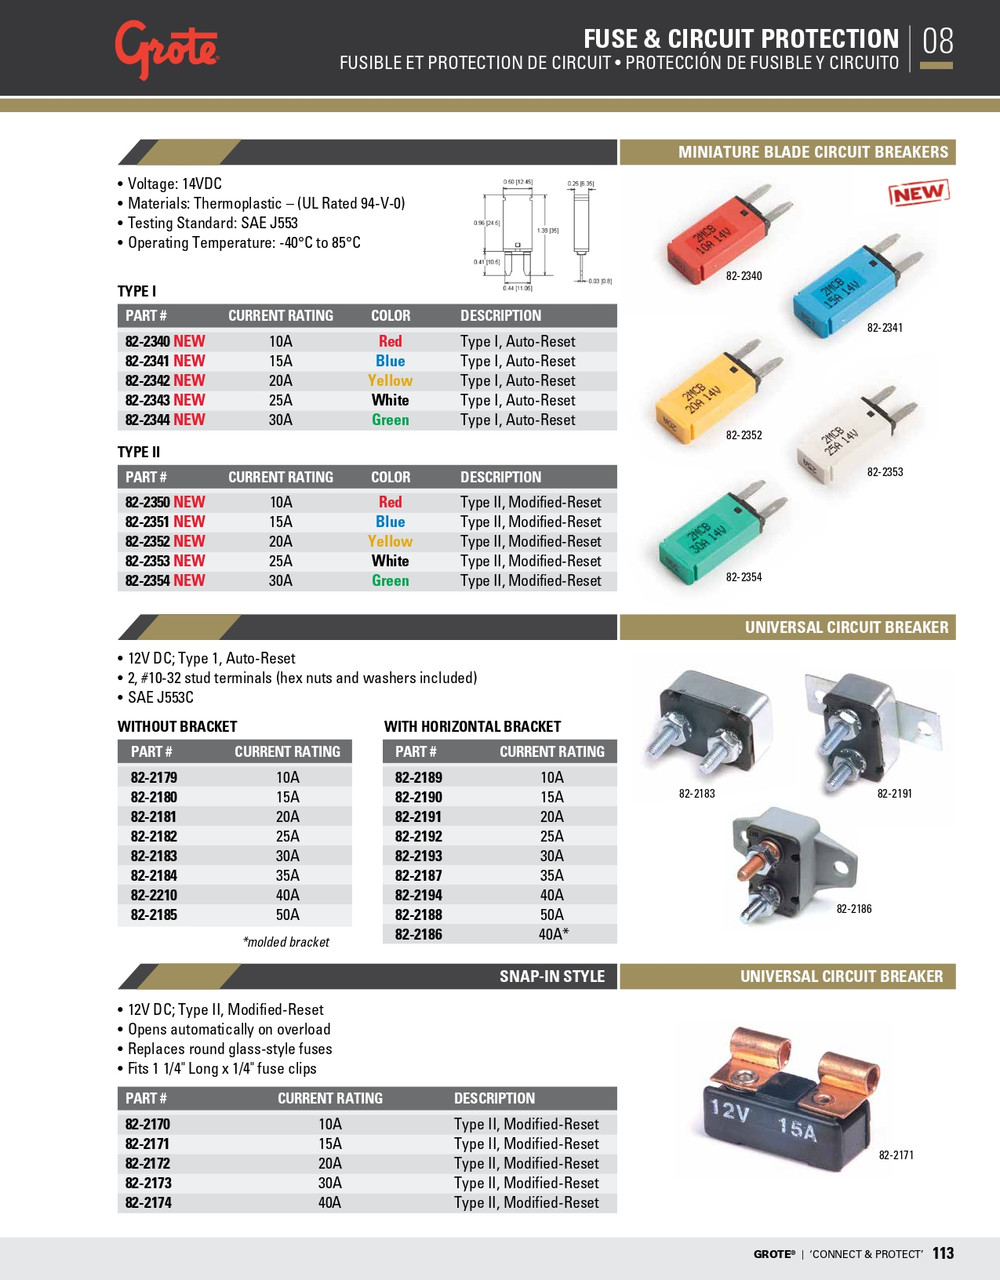 Universal - Stud Circuit Breaker 30A  82-2183